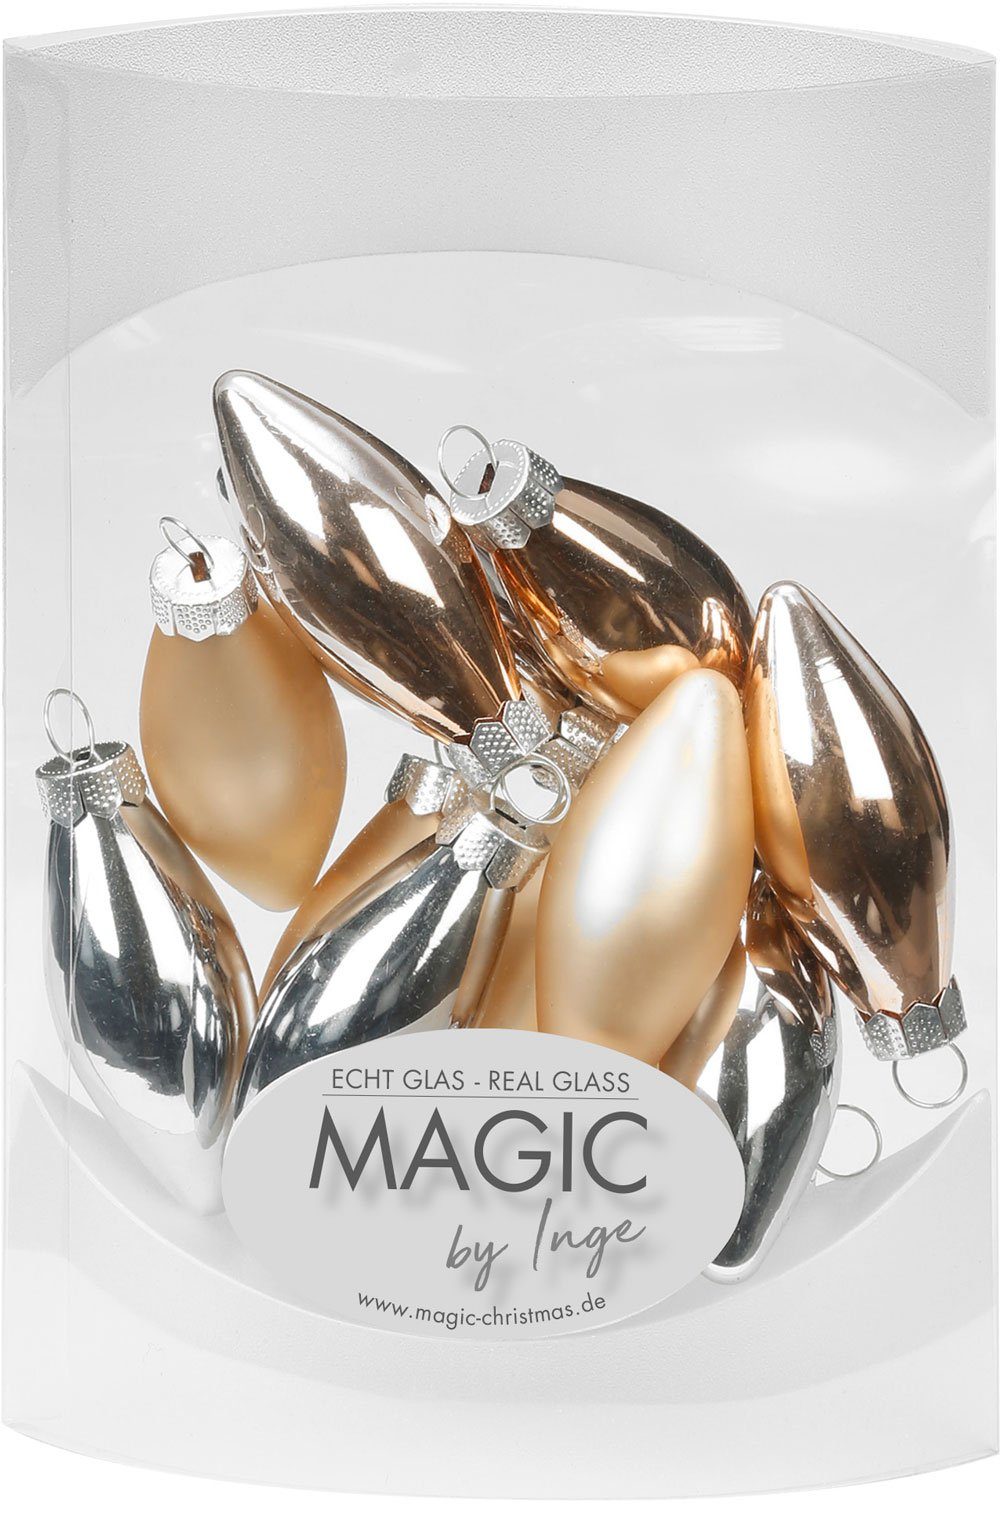 MAGIC by Inge Christbaumschmuck, Christbaumschmuck Mini Glas Oliven 4.5cm Glowing Mountains, 12 Stück